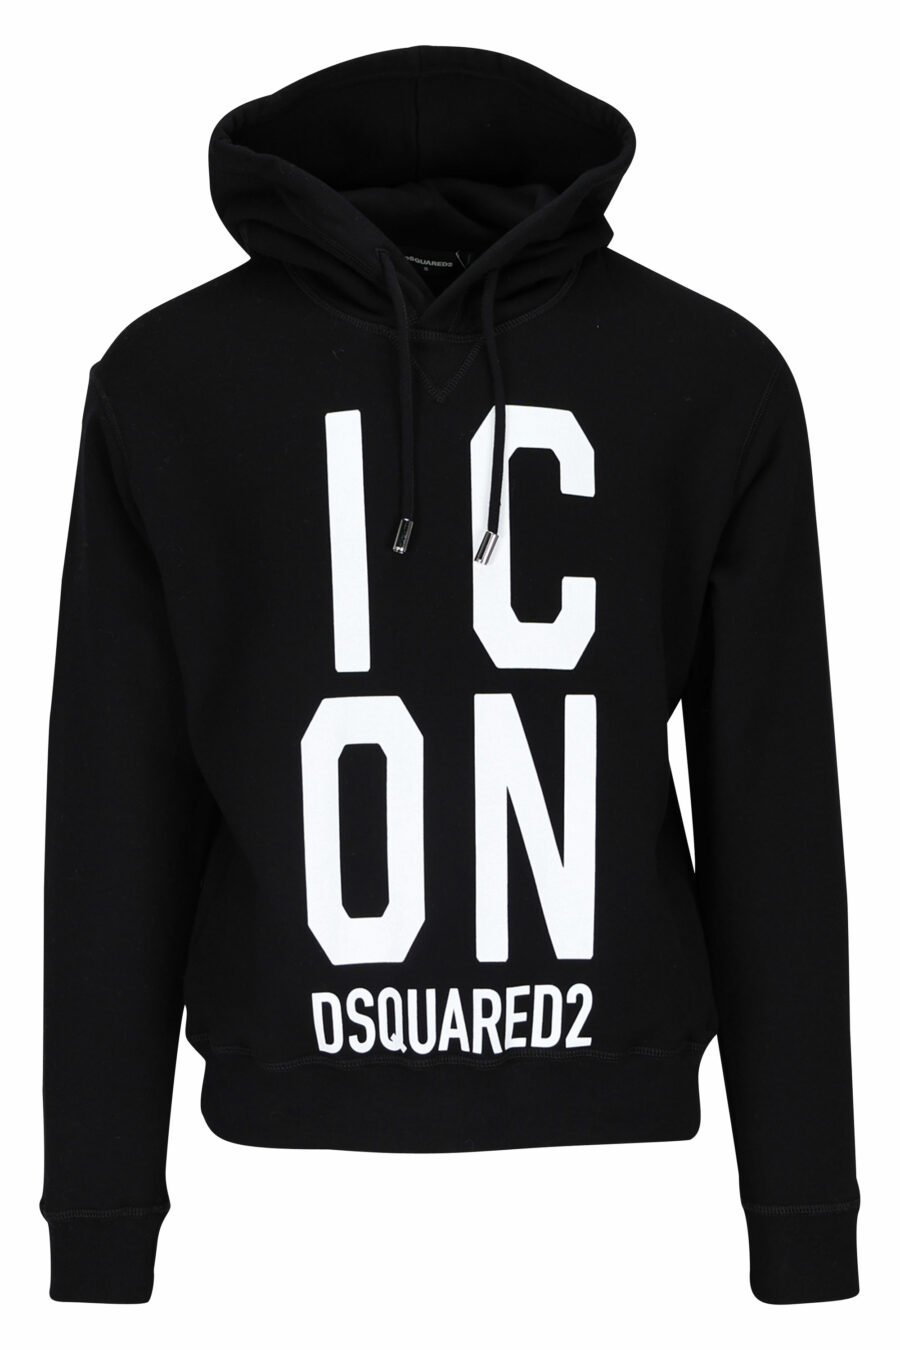 Black hooded sweatshirt with square "icon" maxilogo - 8052134982648